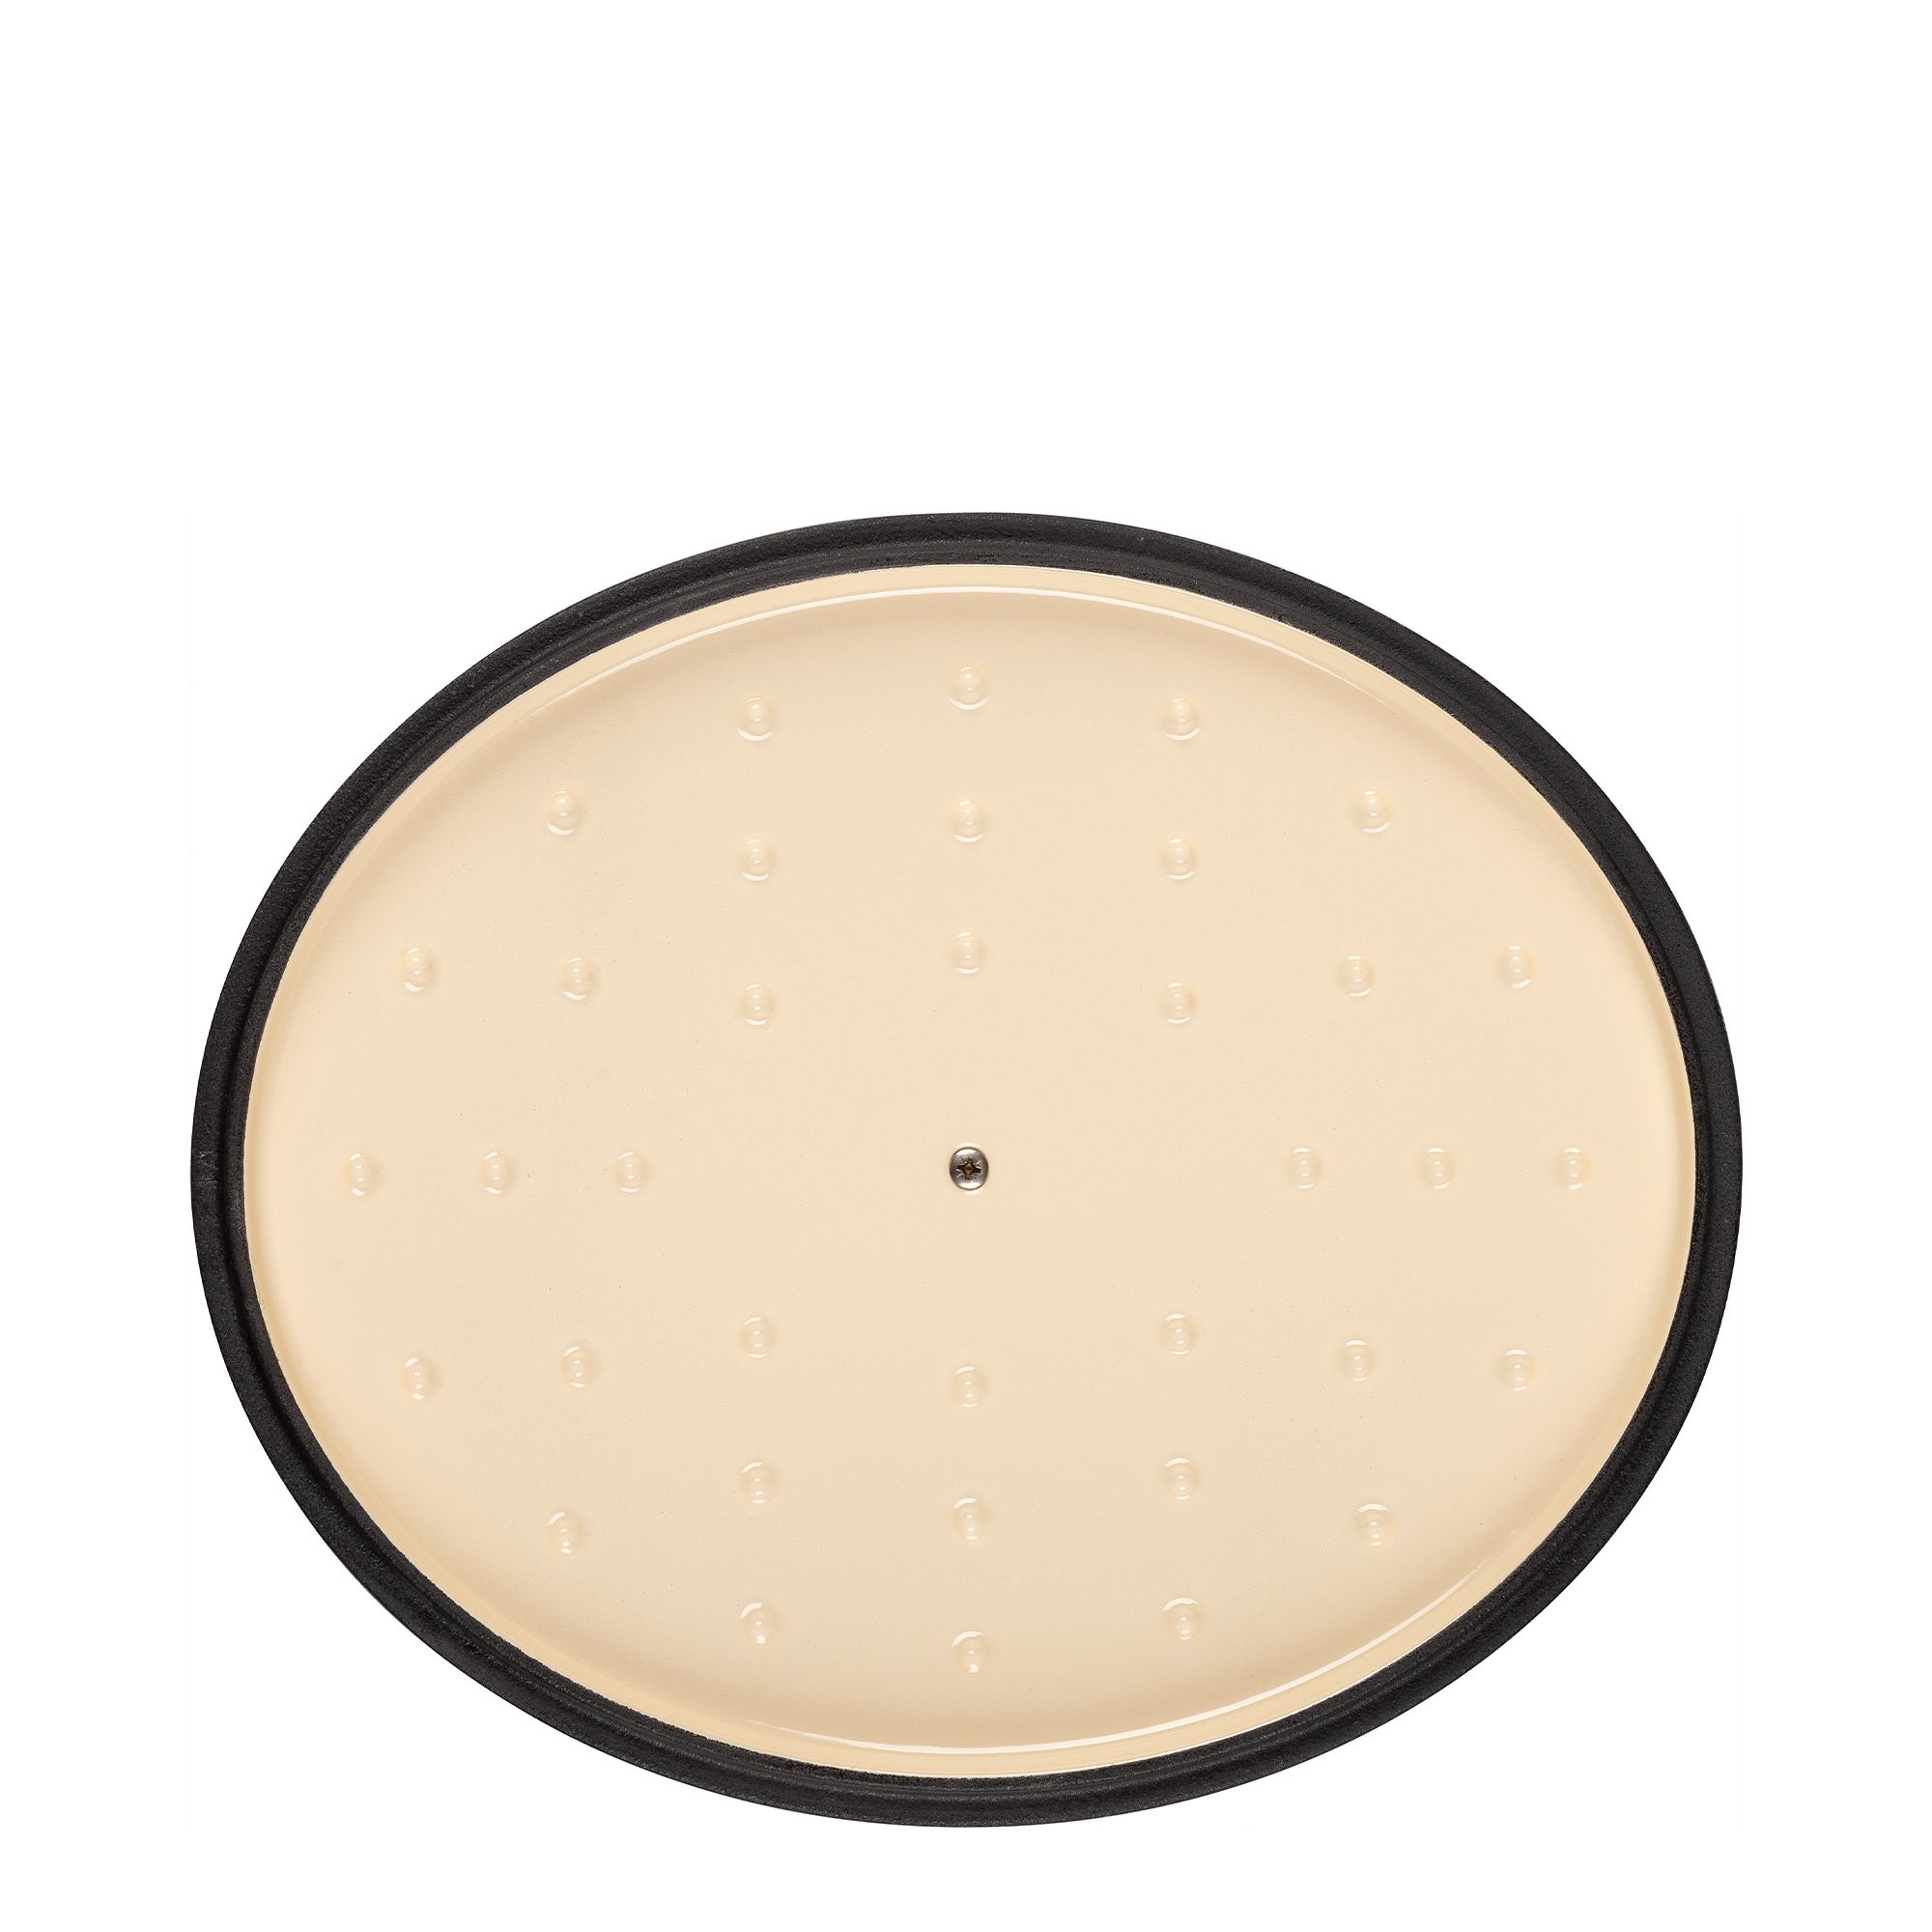 Ballarini - Cocotte 33 cm - oval - Bellamonte - tartufo black